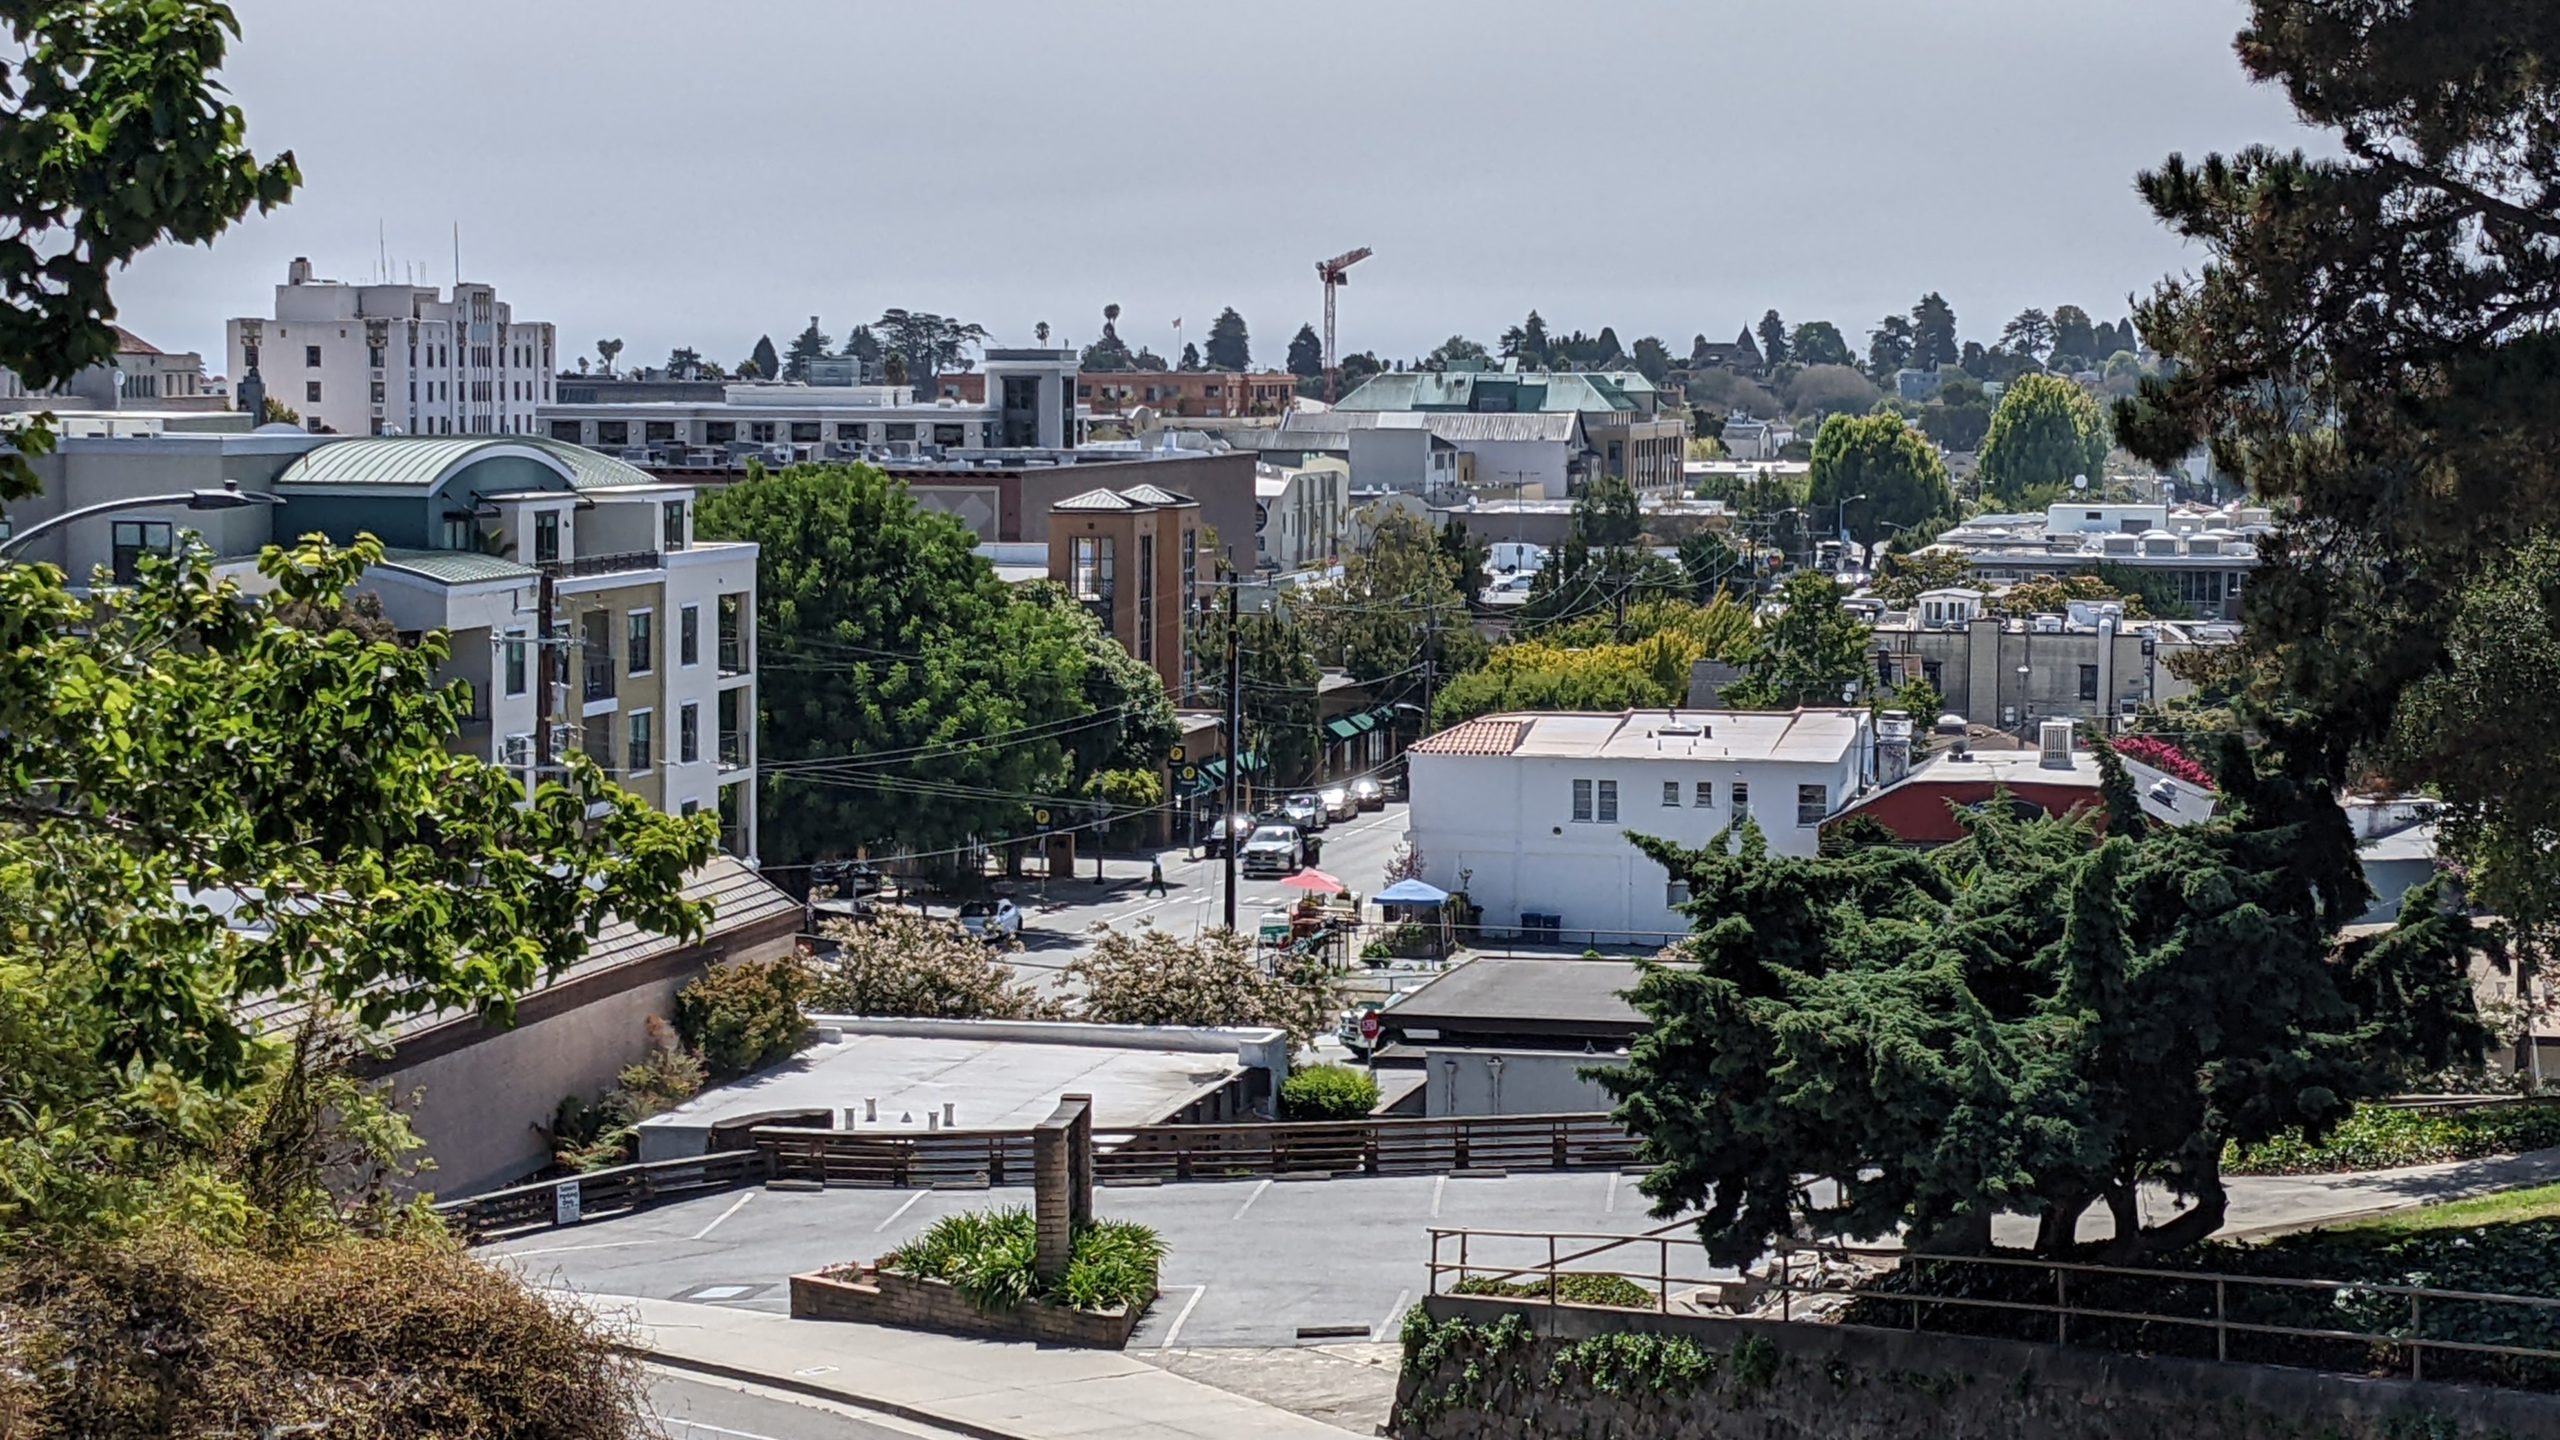 Santa Cruz Downtown expansion plan scaled back - Santa Cruz Local